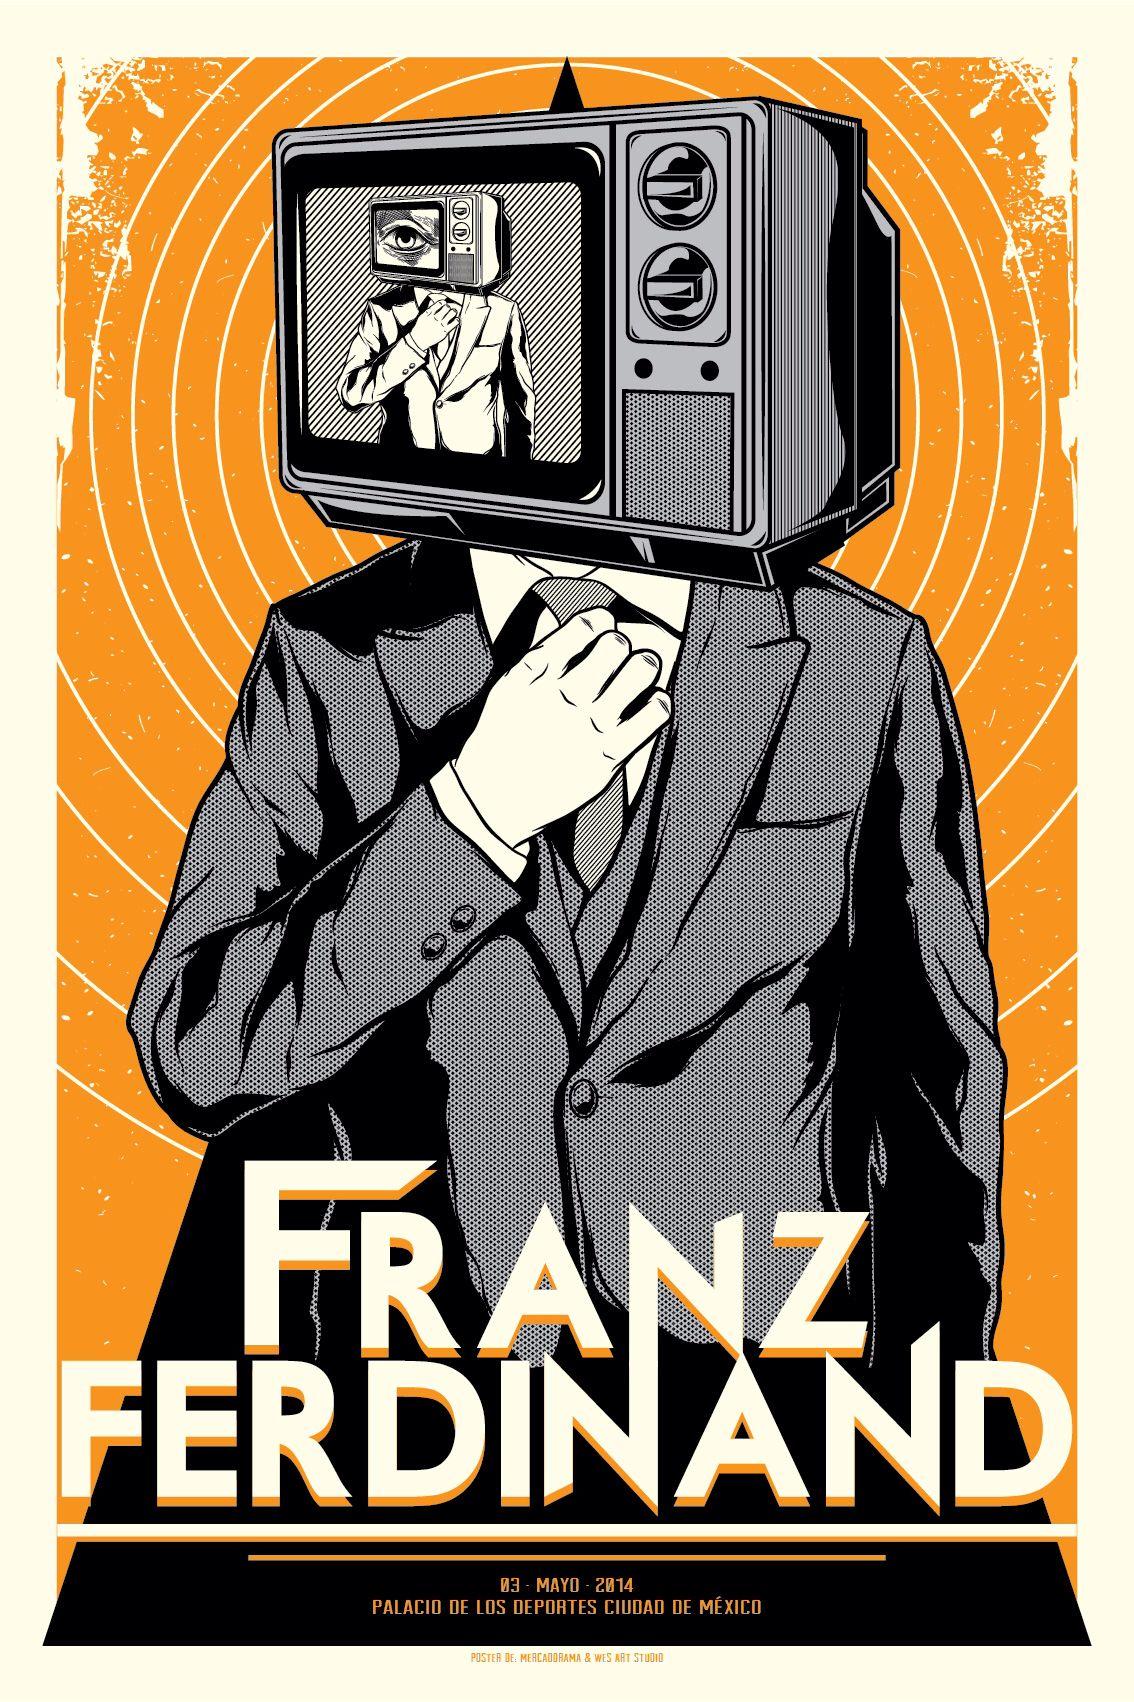 Franz Ferdinand live at Mexico City. Artwork: Wes Art Studio